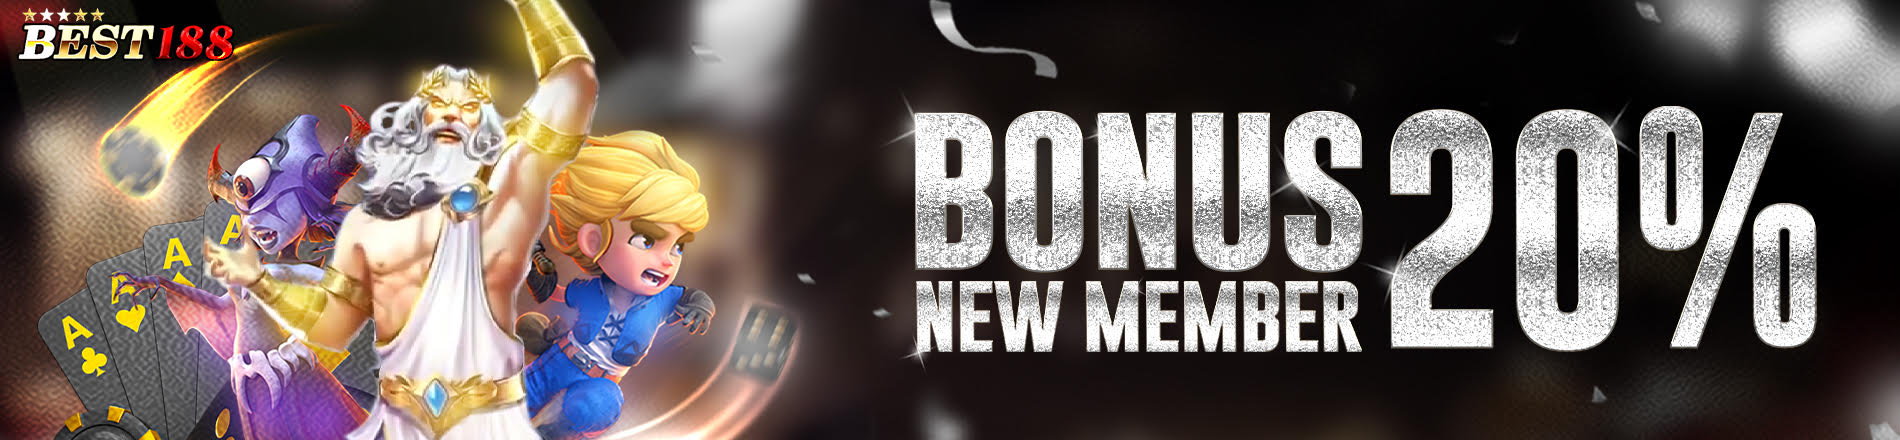 Welcome Bonus 20% new member